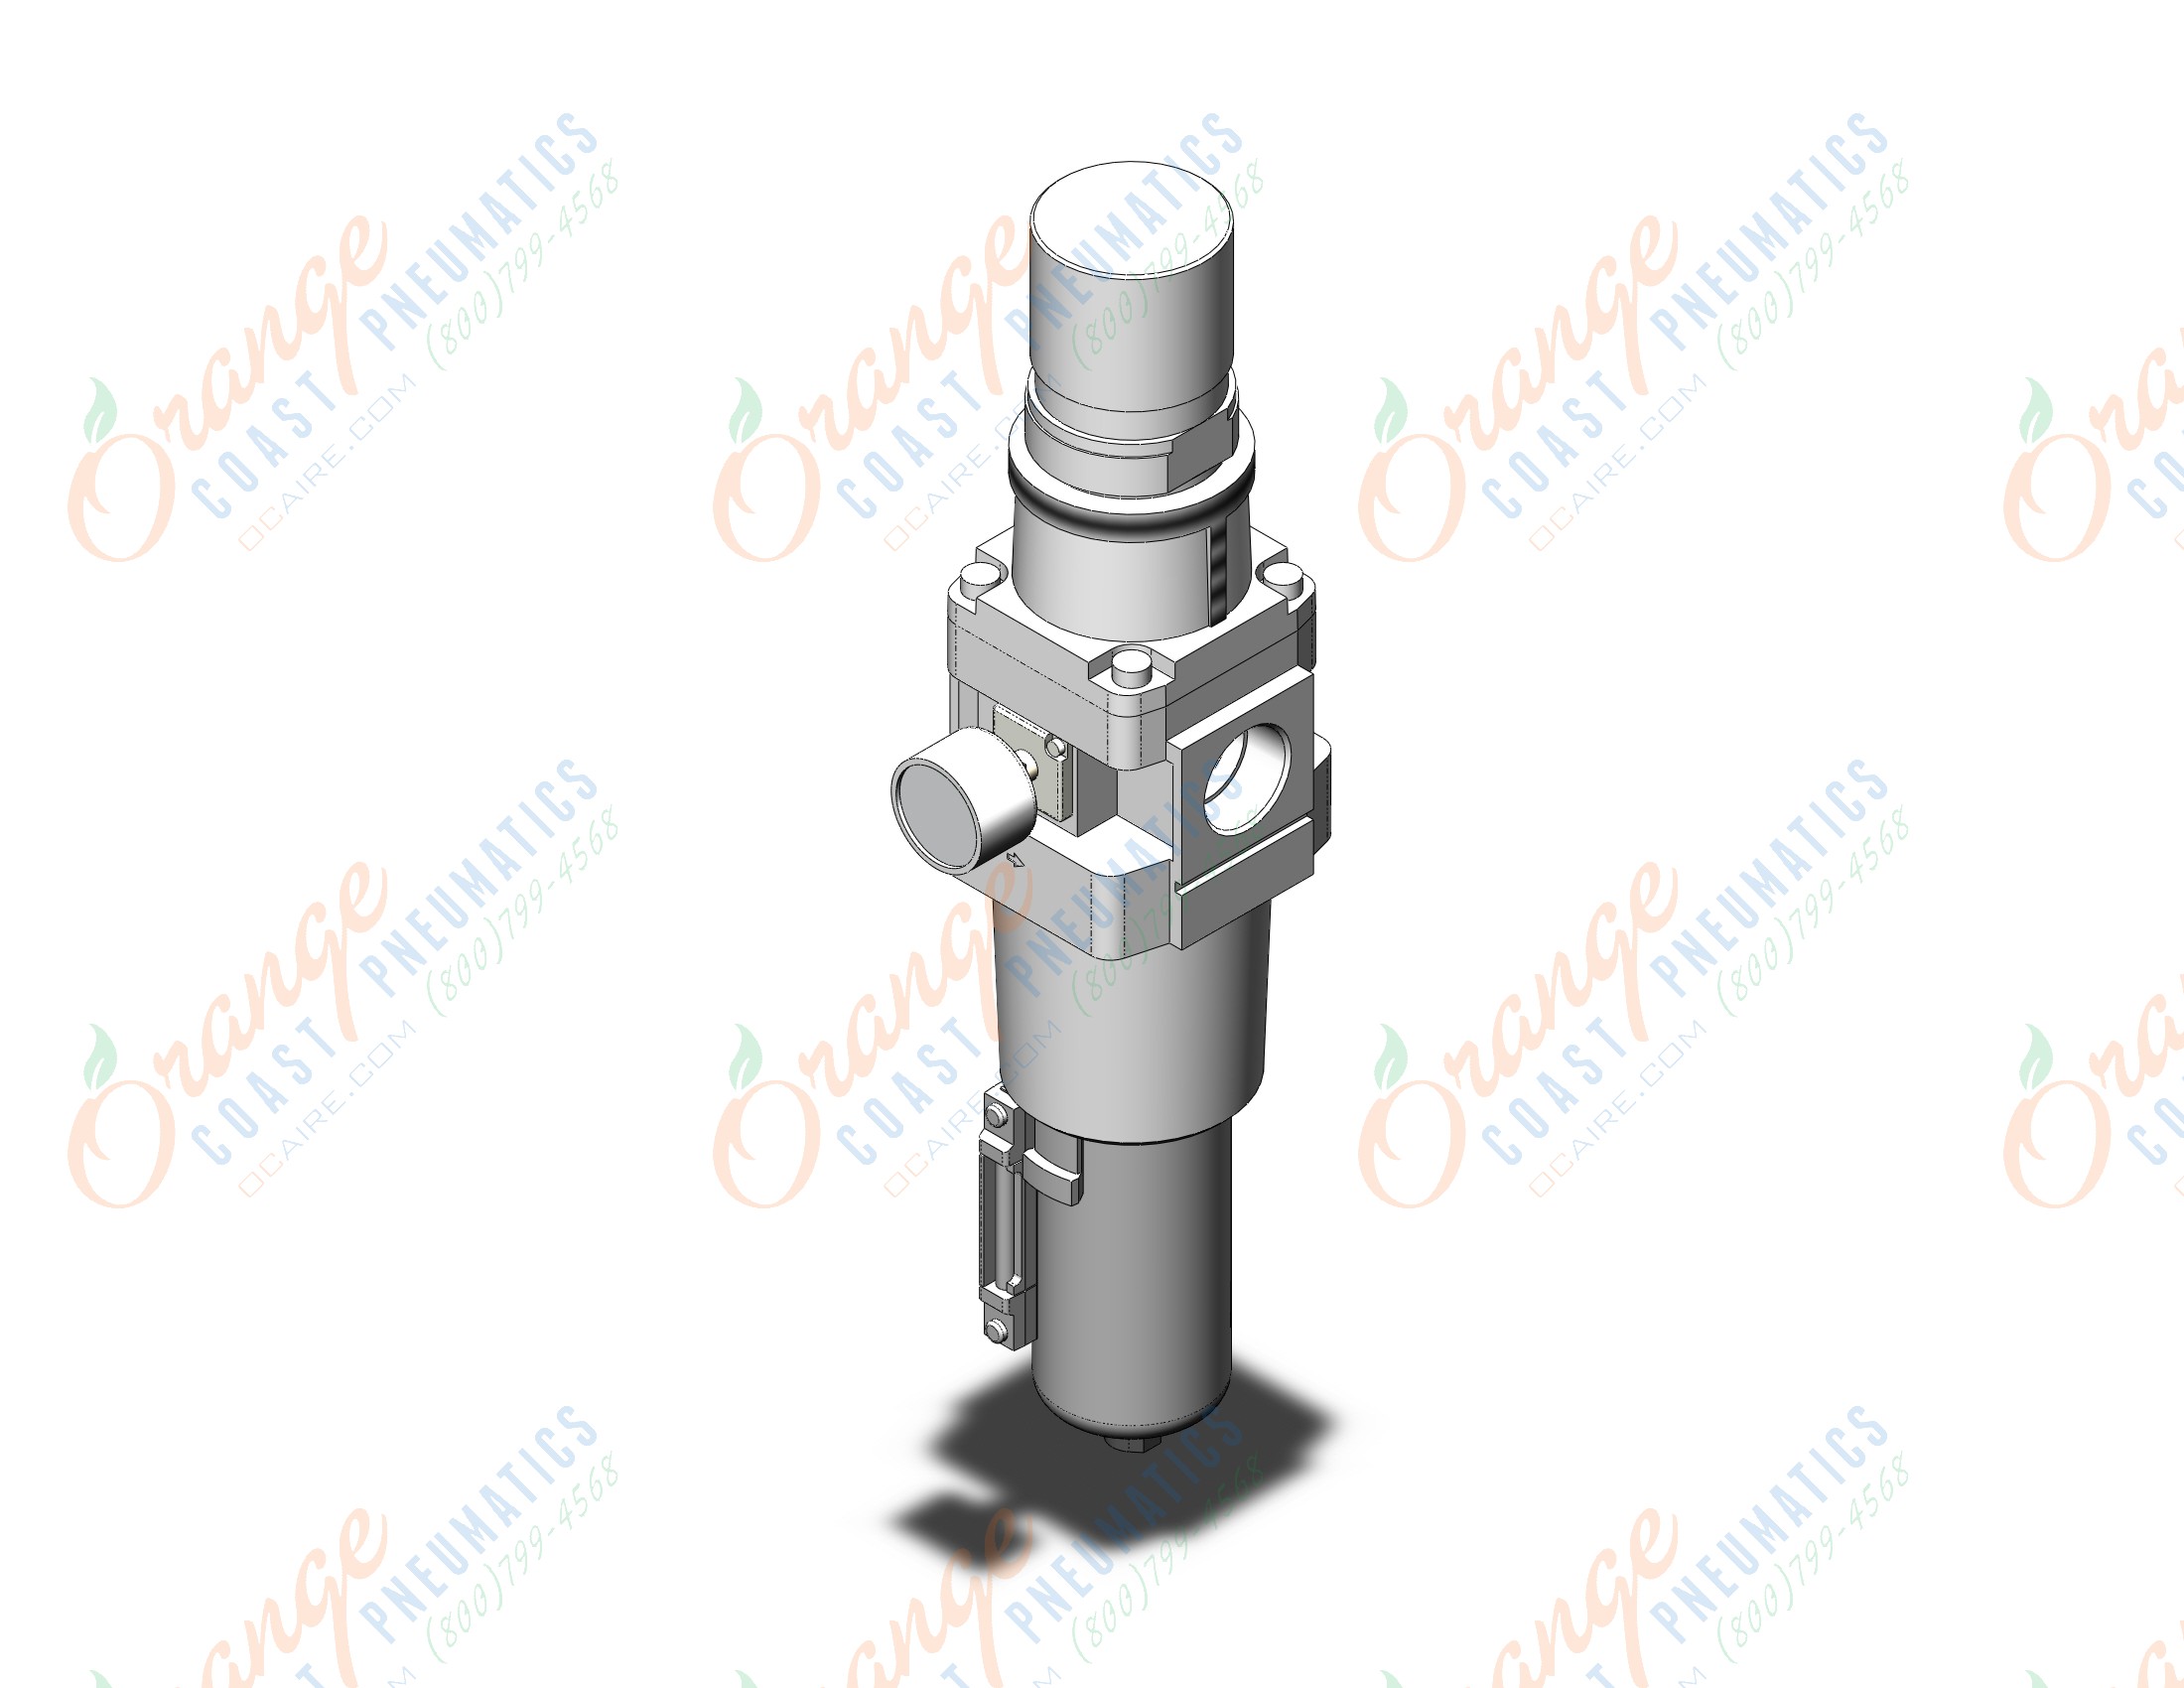 SMC AW60-10G-8-B filter/regulator, FILTER/REGULATOR, MODULAR F.R.L.